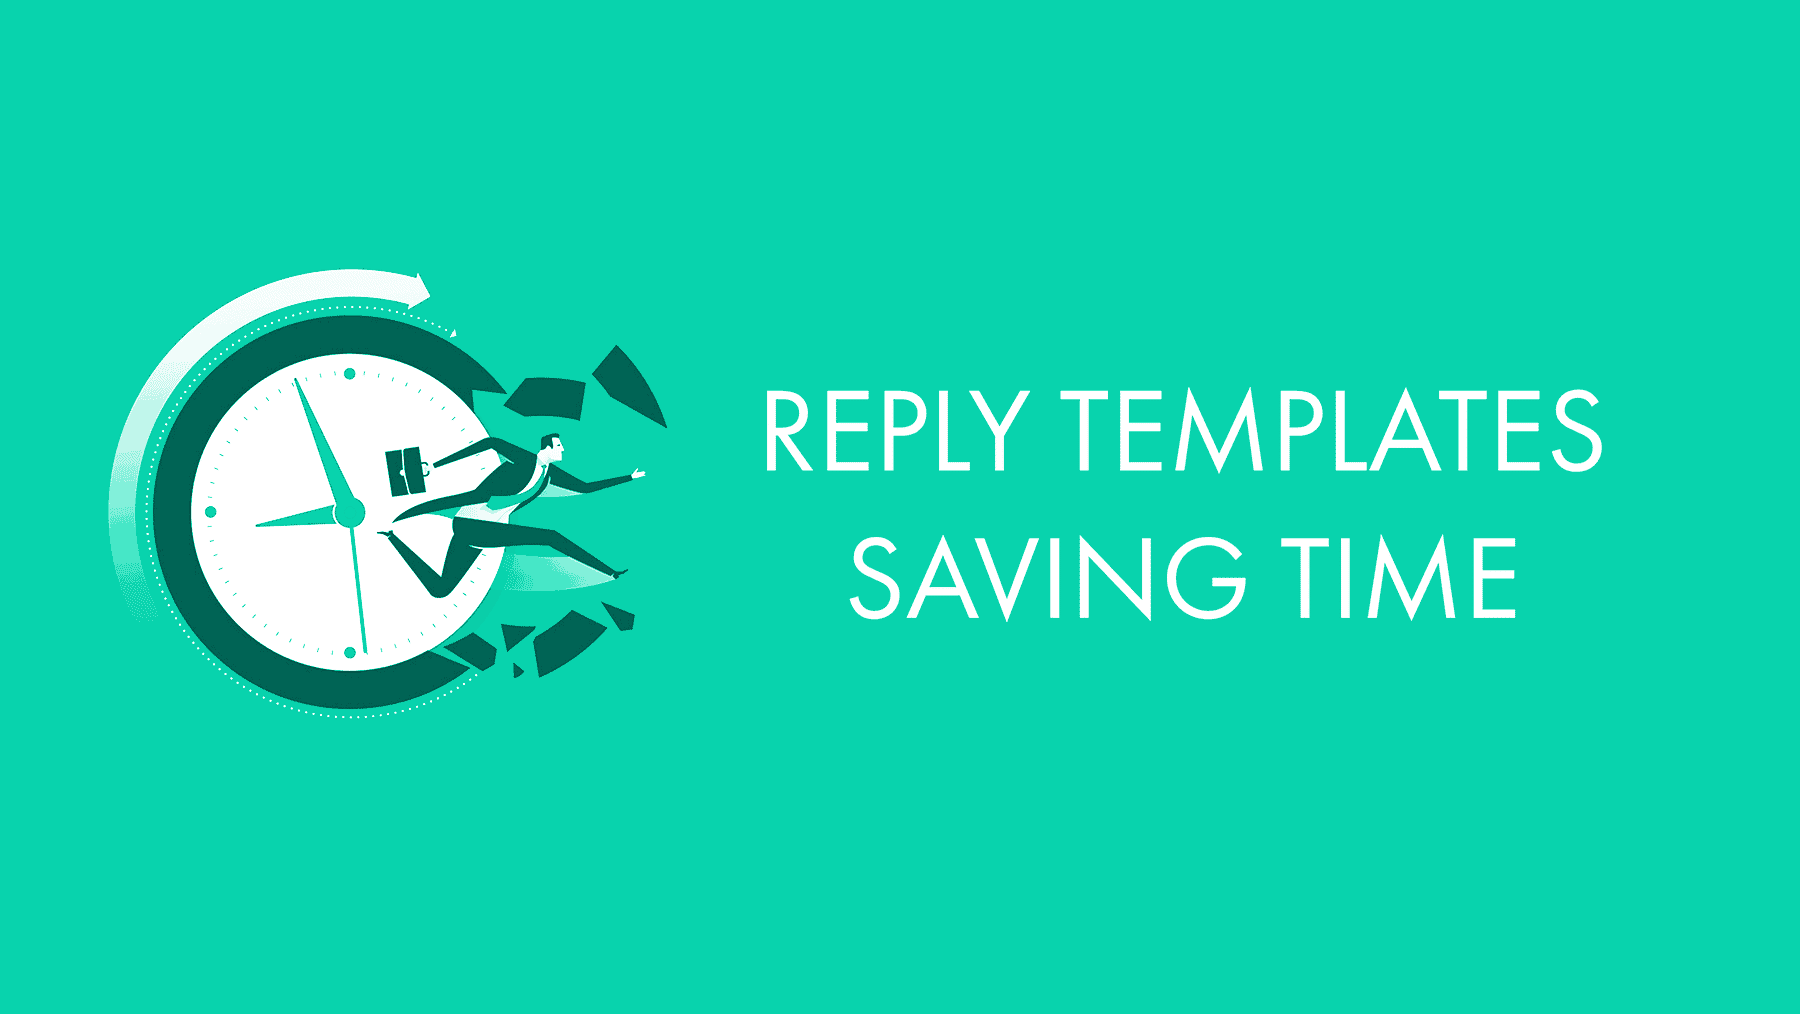 Reply Templates saving time: a man and a clock